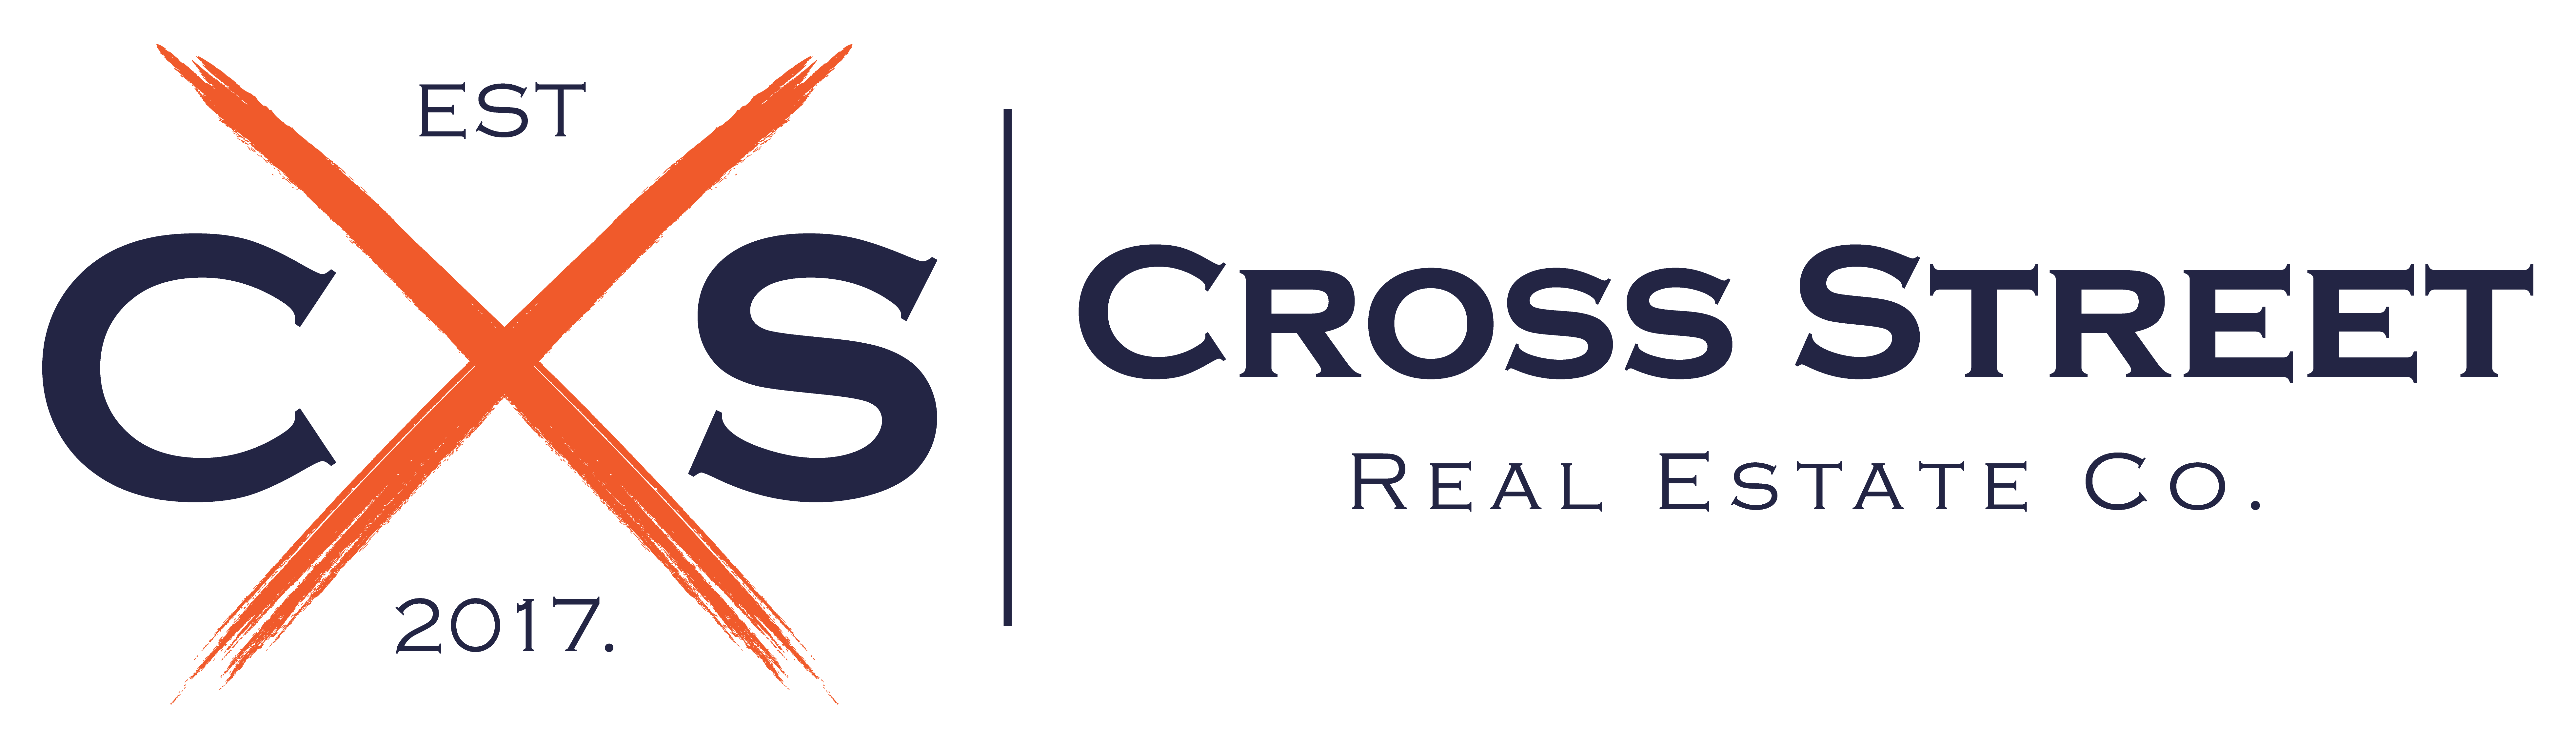 Cross Street Real Estate Co.